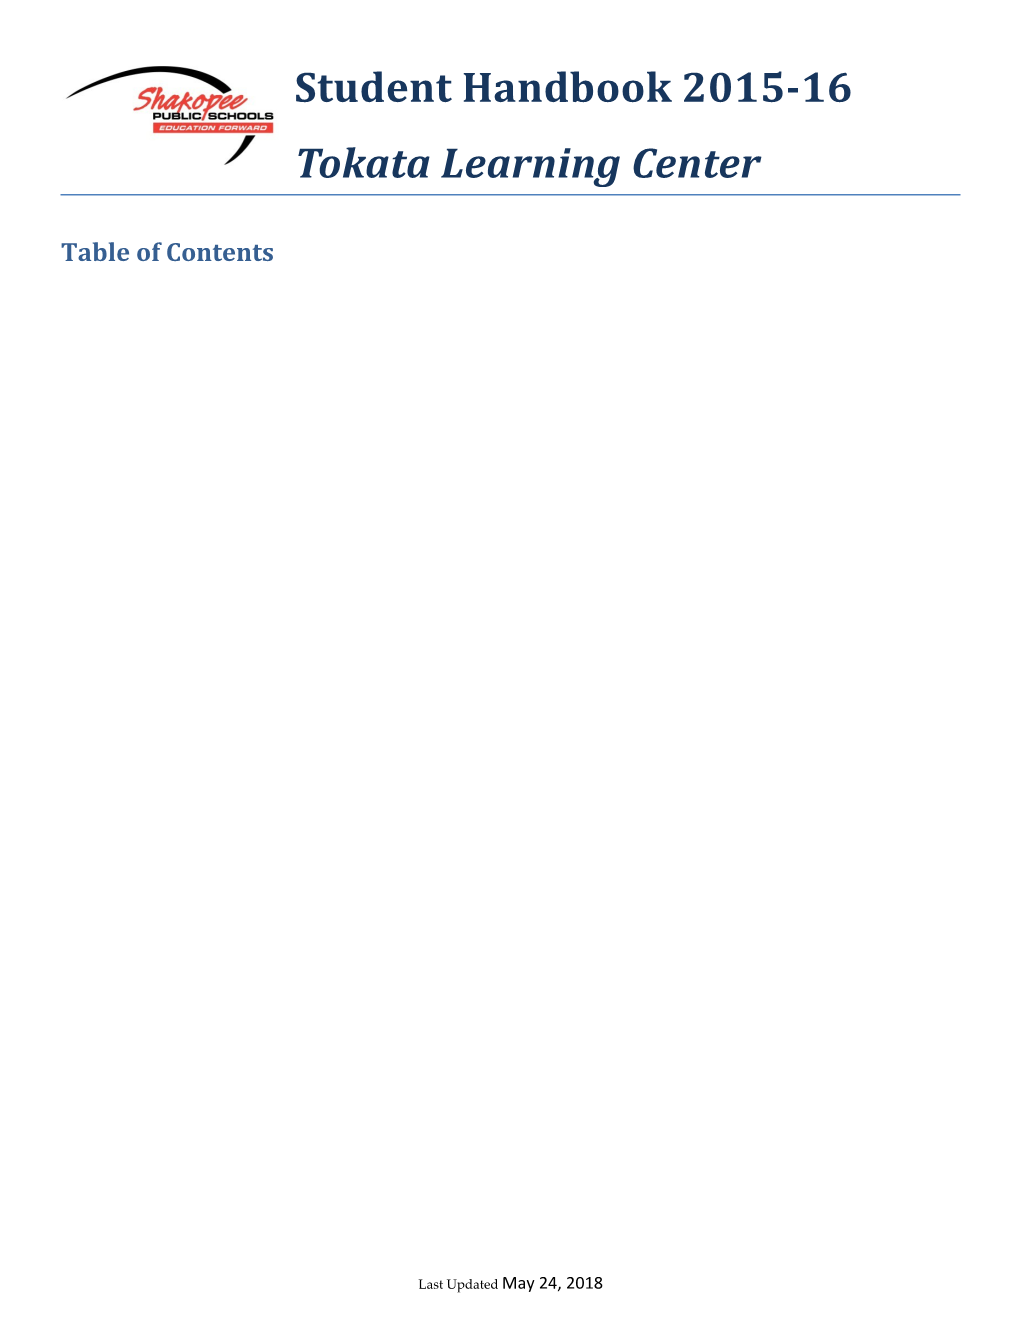 Tokata Learning Center